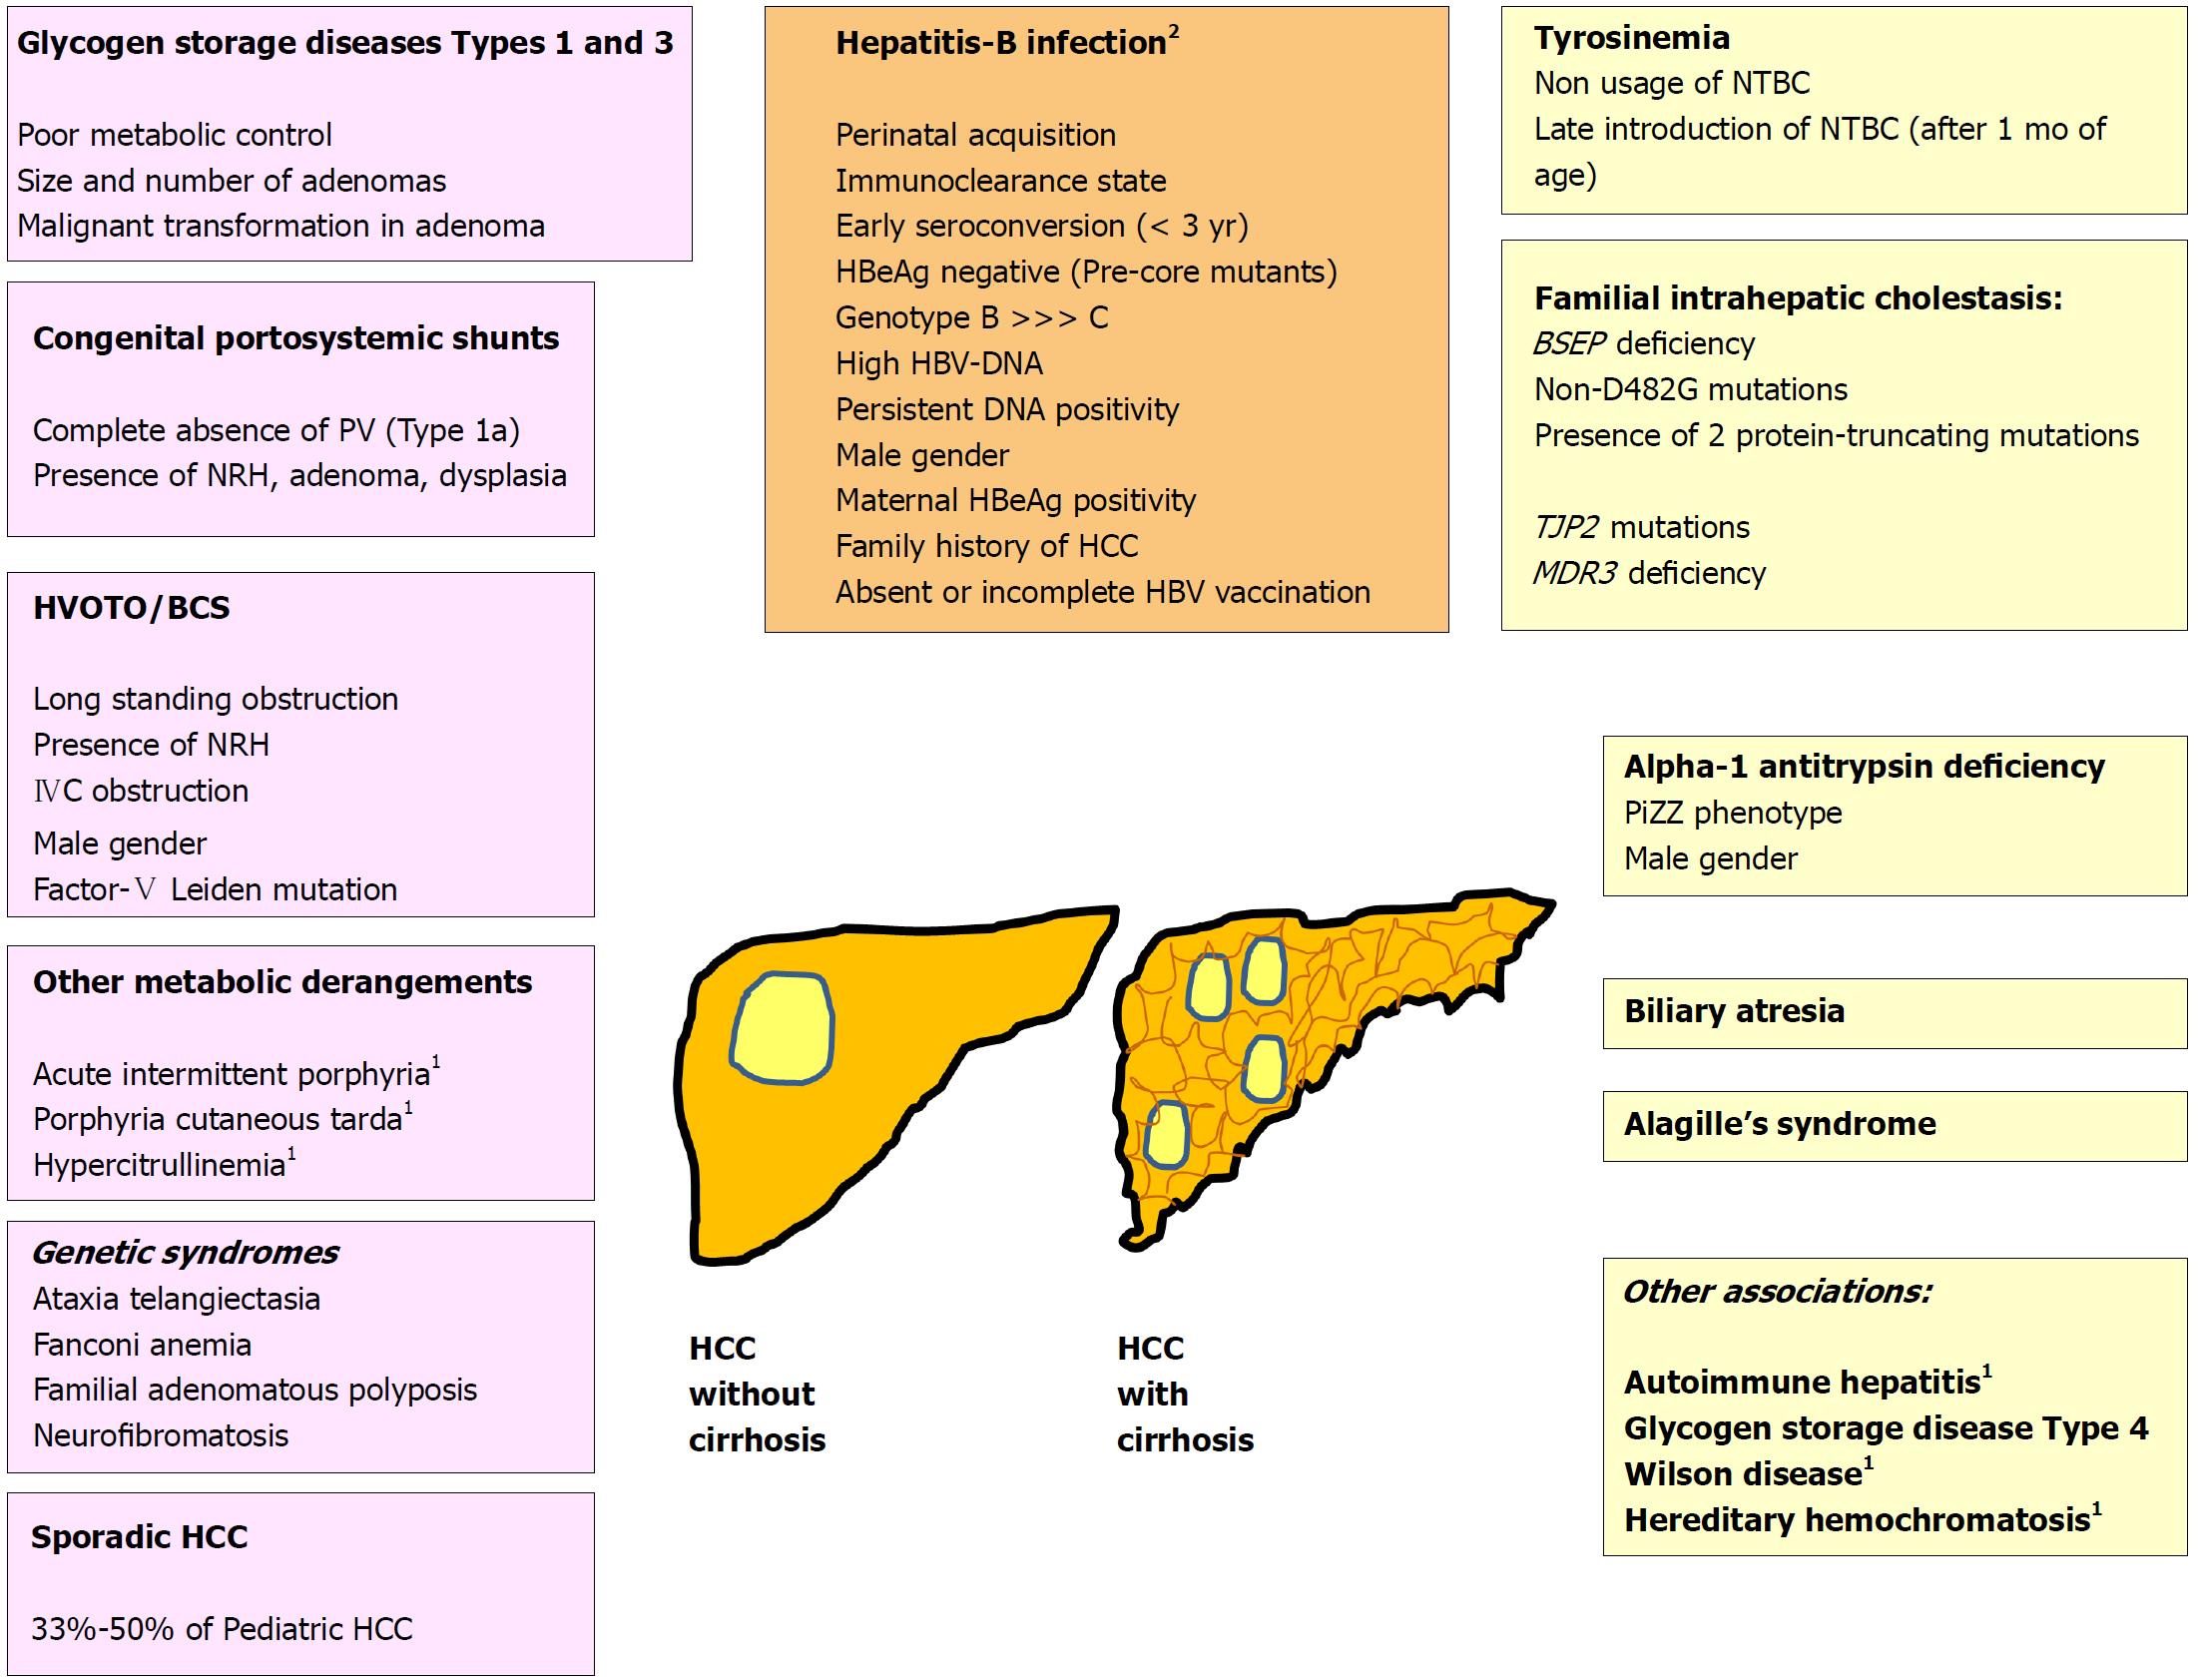 Histogenesis and Precursors